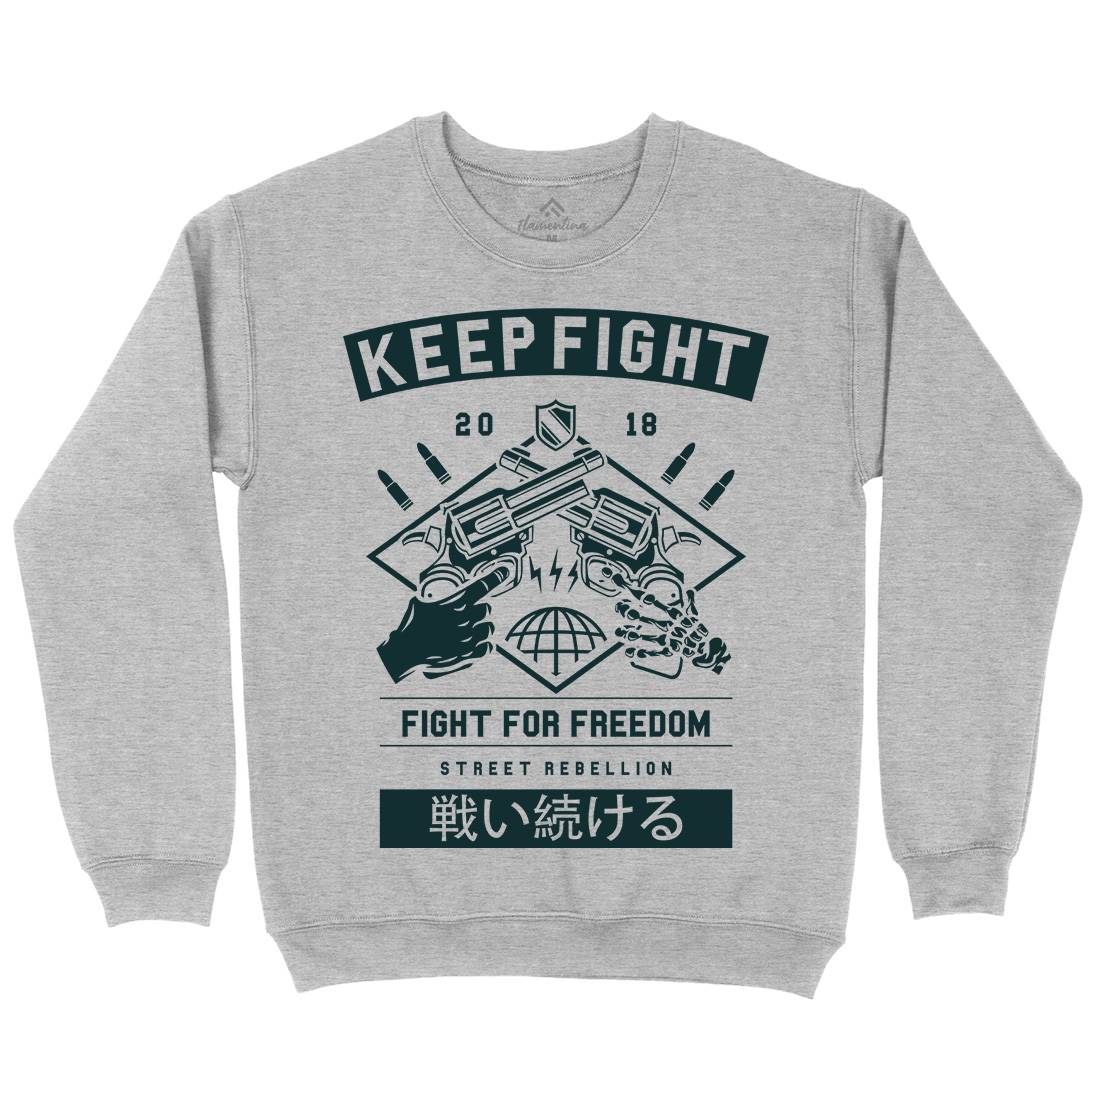 Keep Fight Mens Crew Neck Sweatshirt Illuminati A245